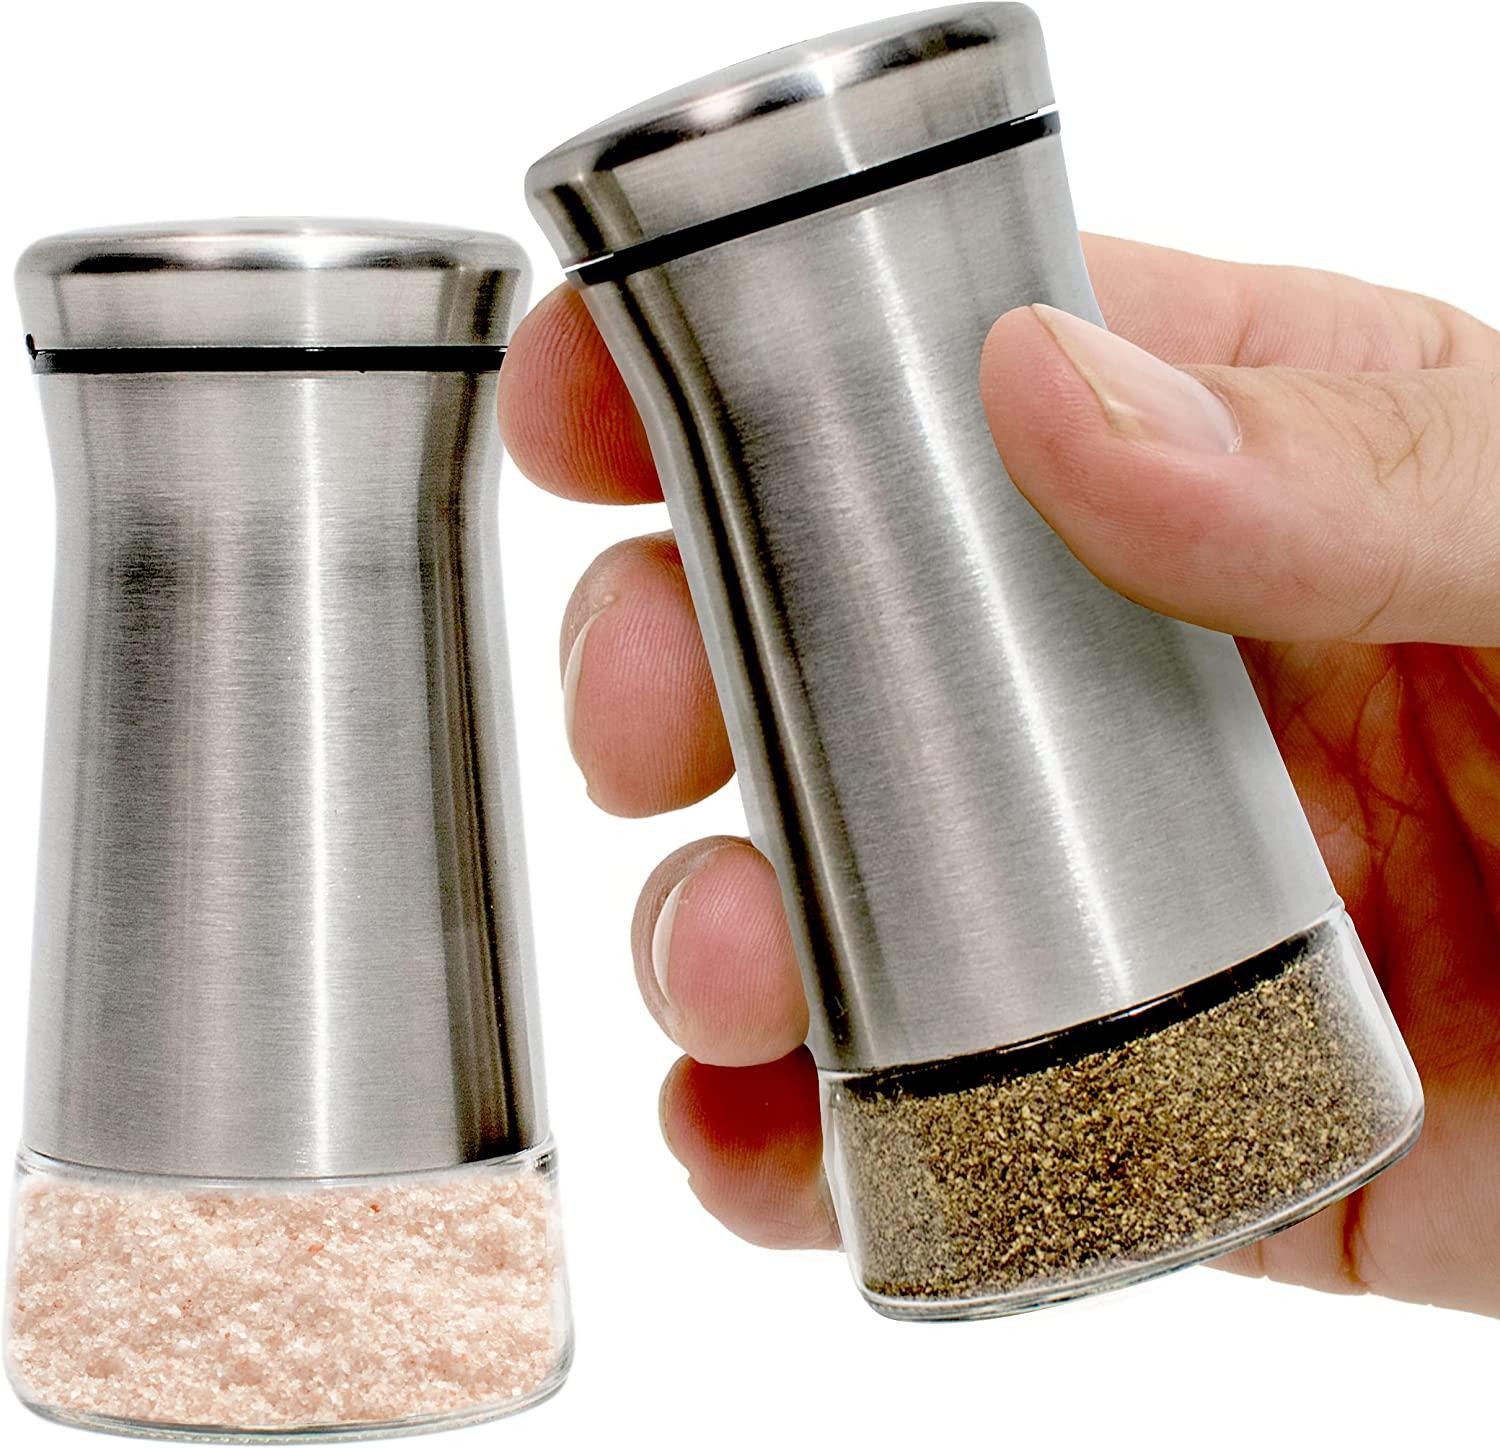 2-Piece Premium Salt and Pepper Shaker Set for $6.66